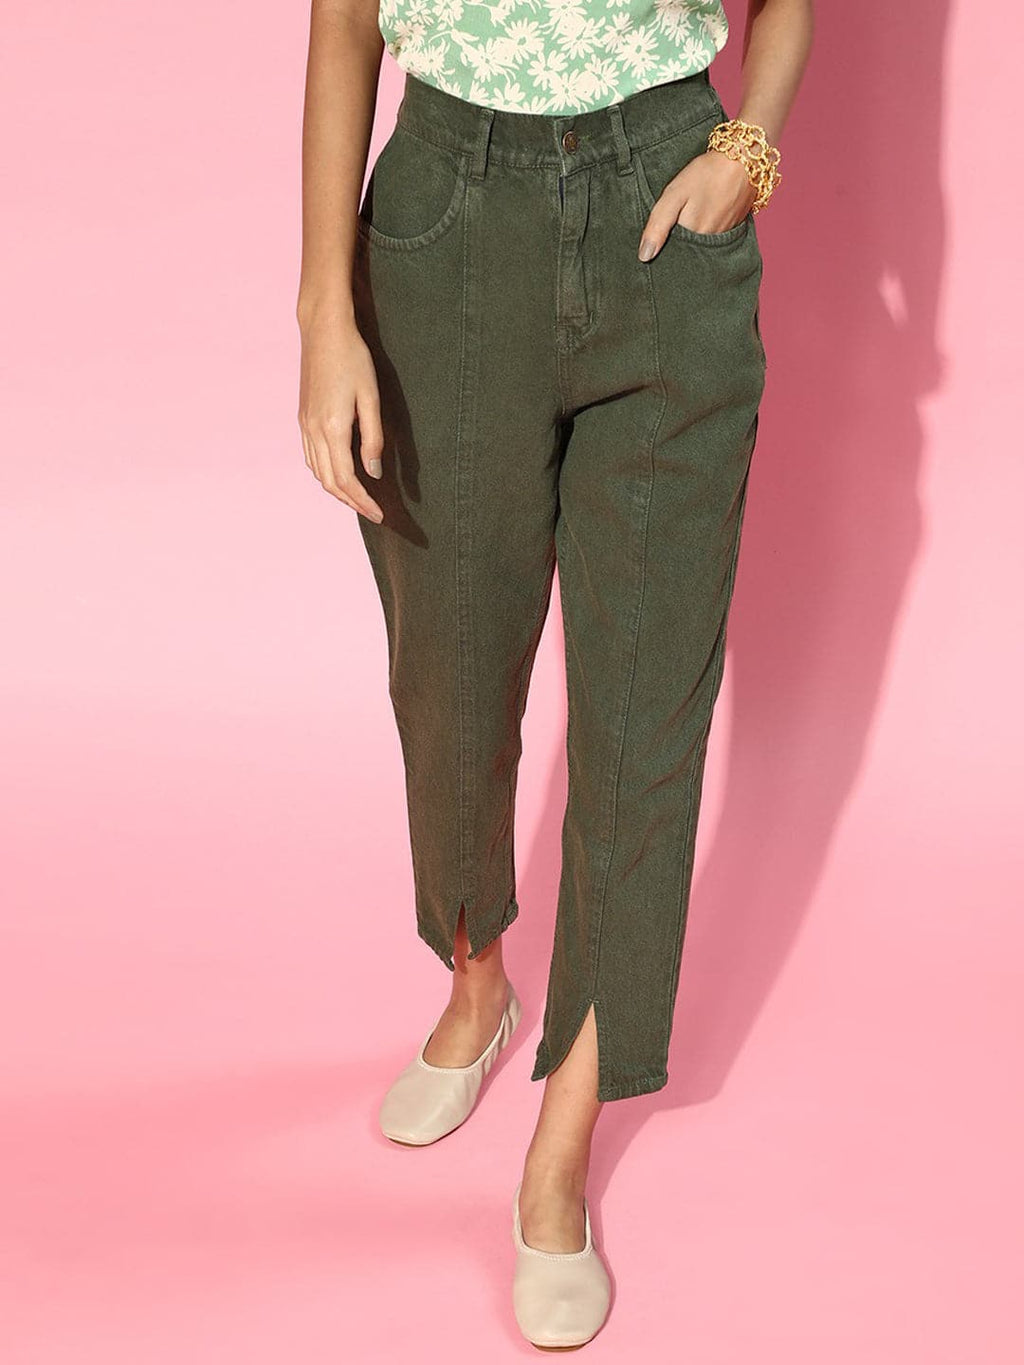 Buy Women Olive Green Front Slit Jeans Online at Sassafras